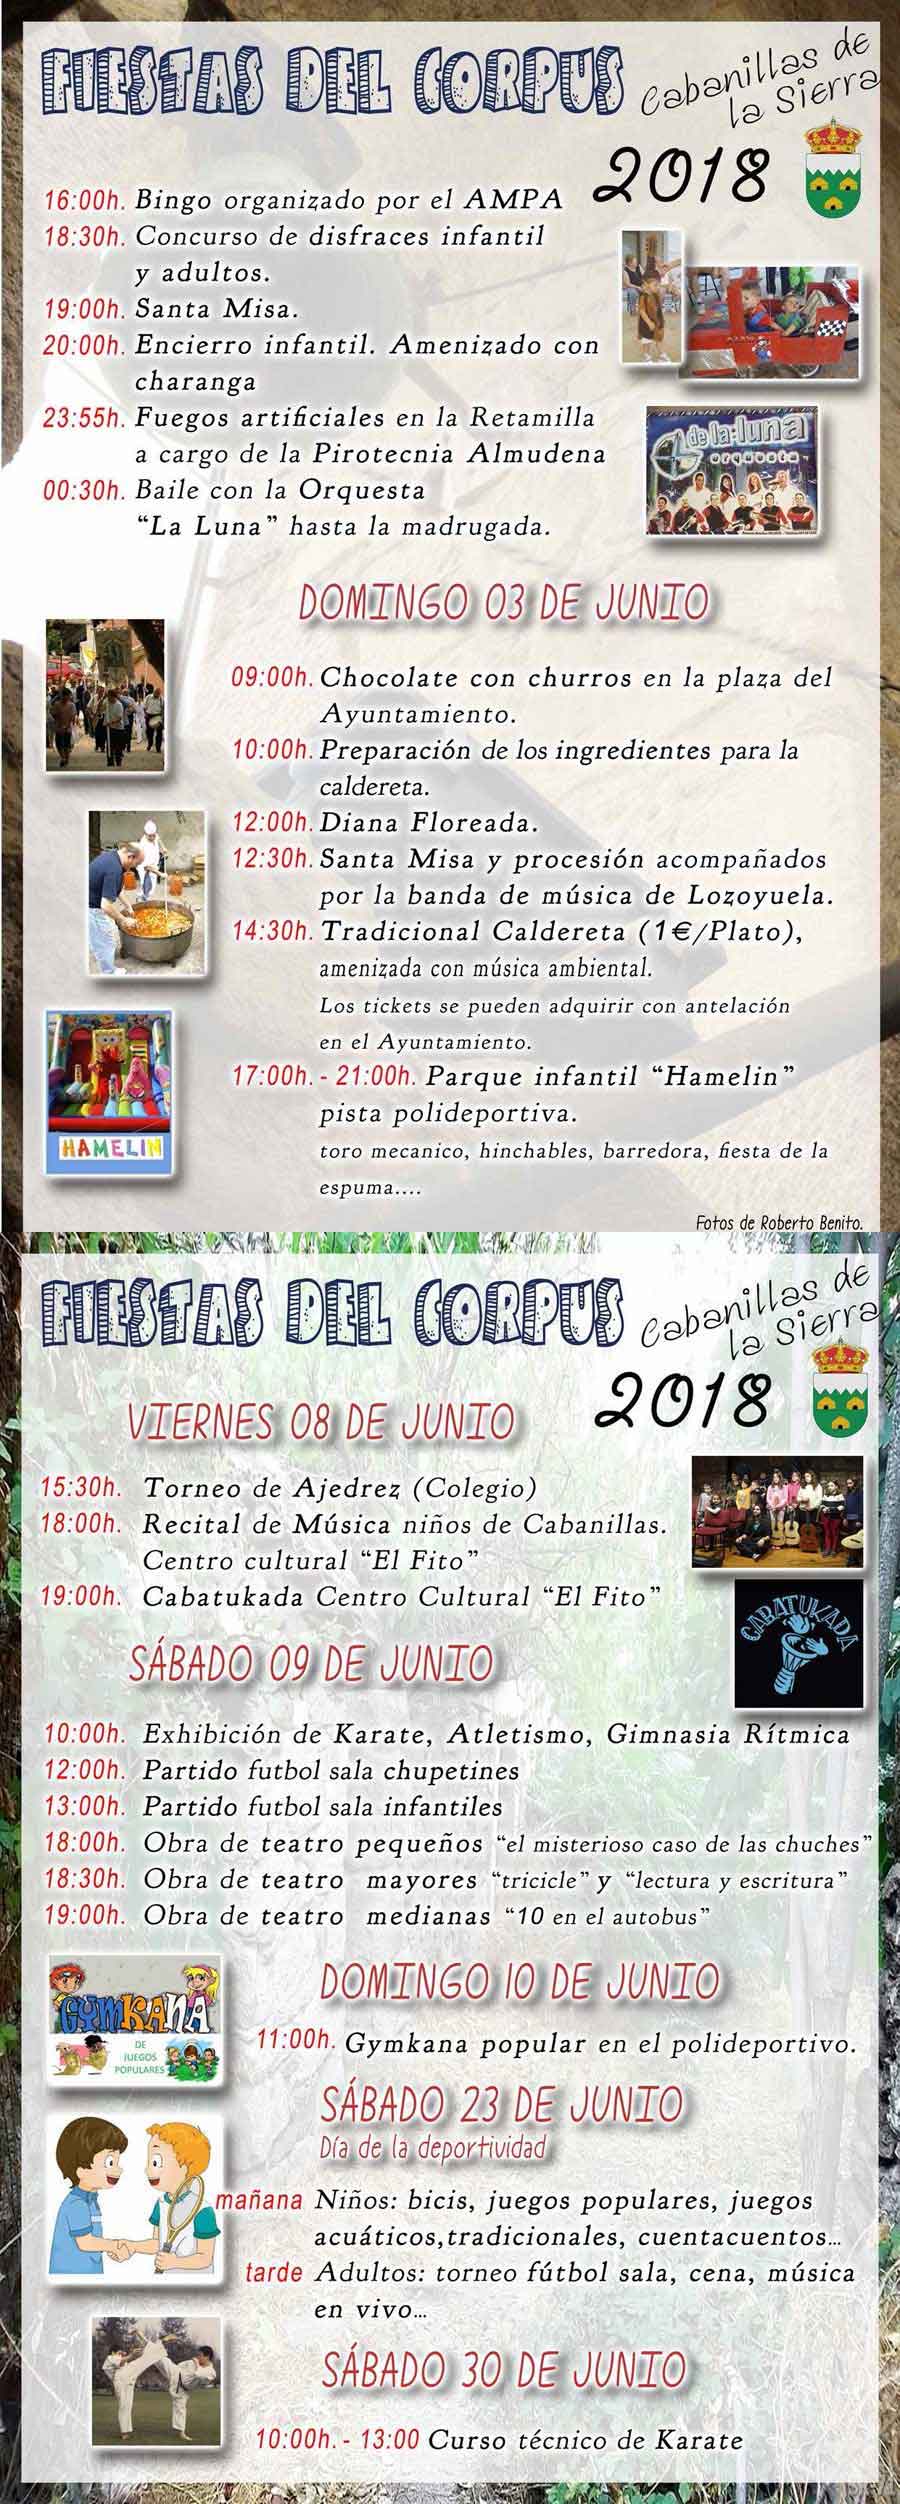 Fiestas corpus cabanillas de la sierra 2018 2 3